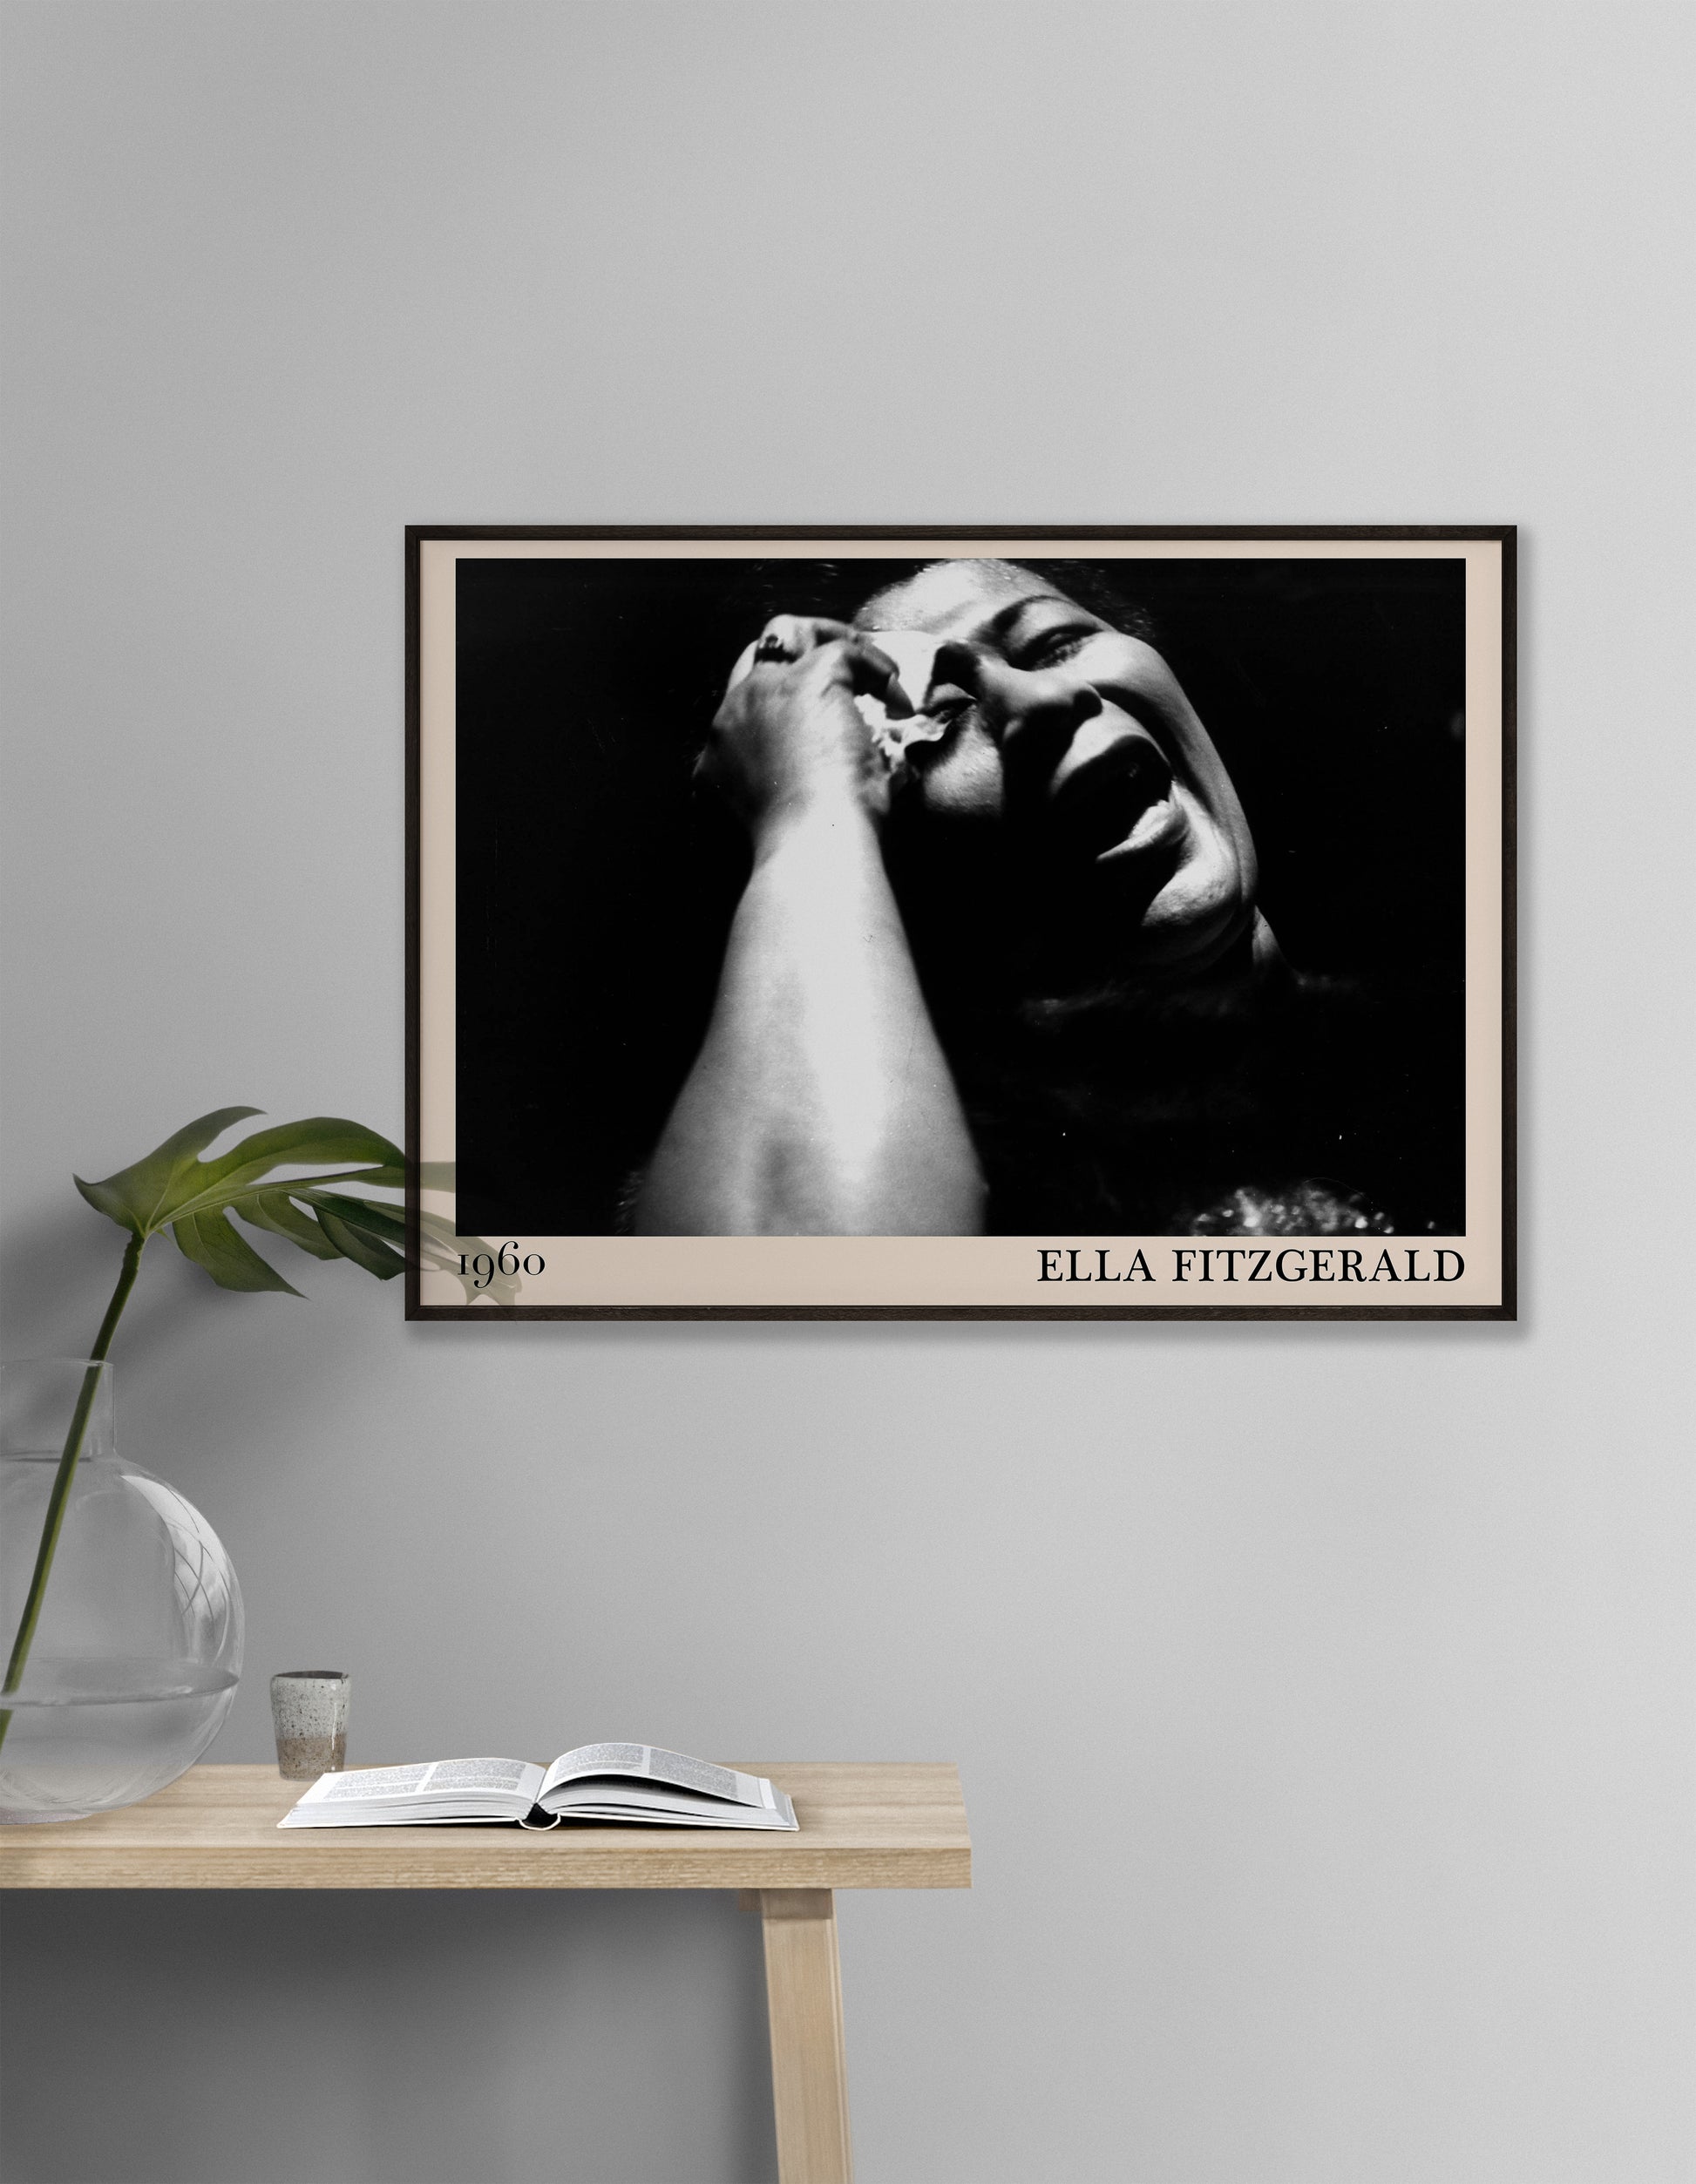 Framed office A3 music poster of Ella Fitzgerald